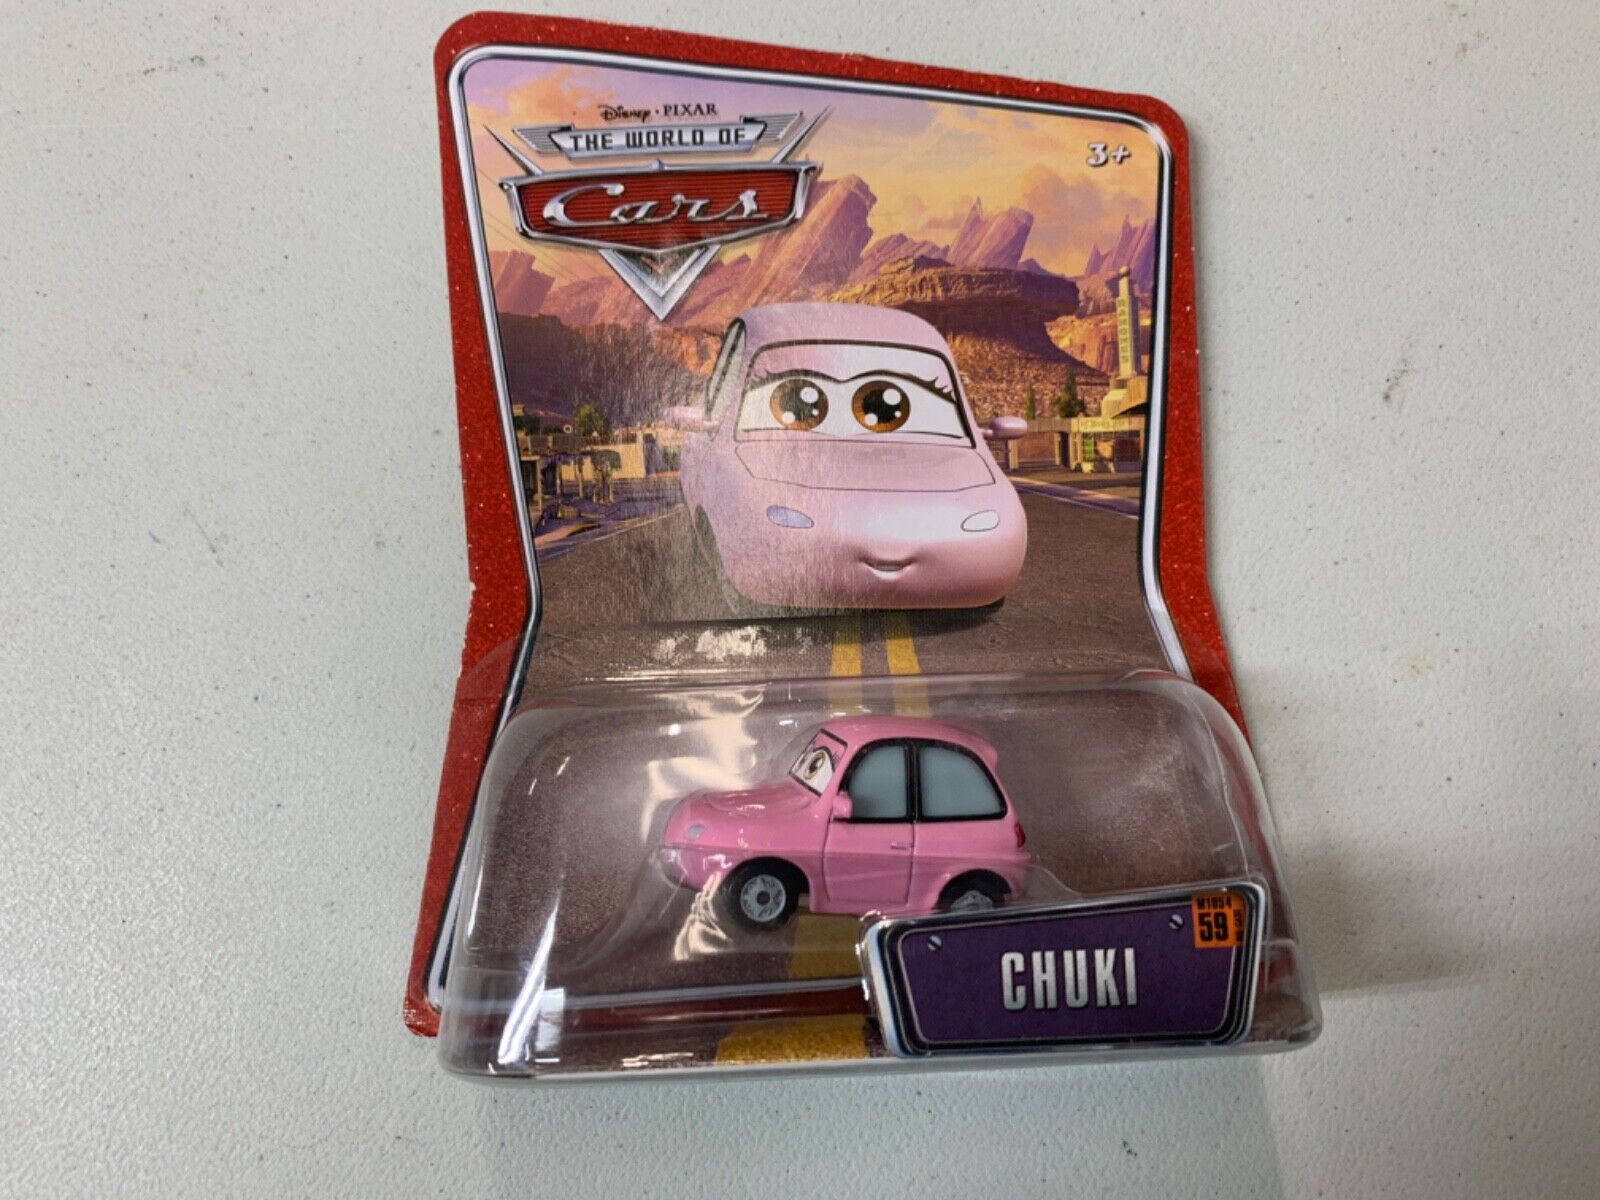 Disney Pixar Cars The World of Cars Chuki